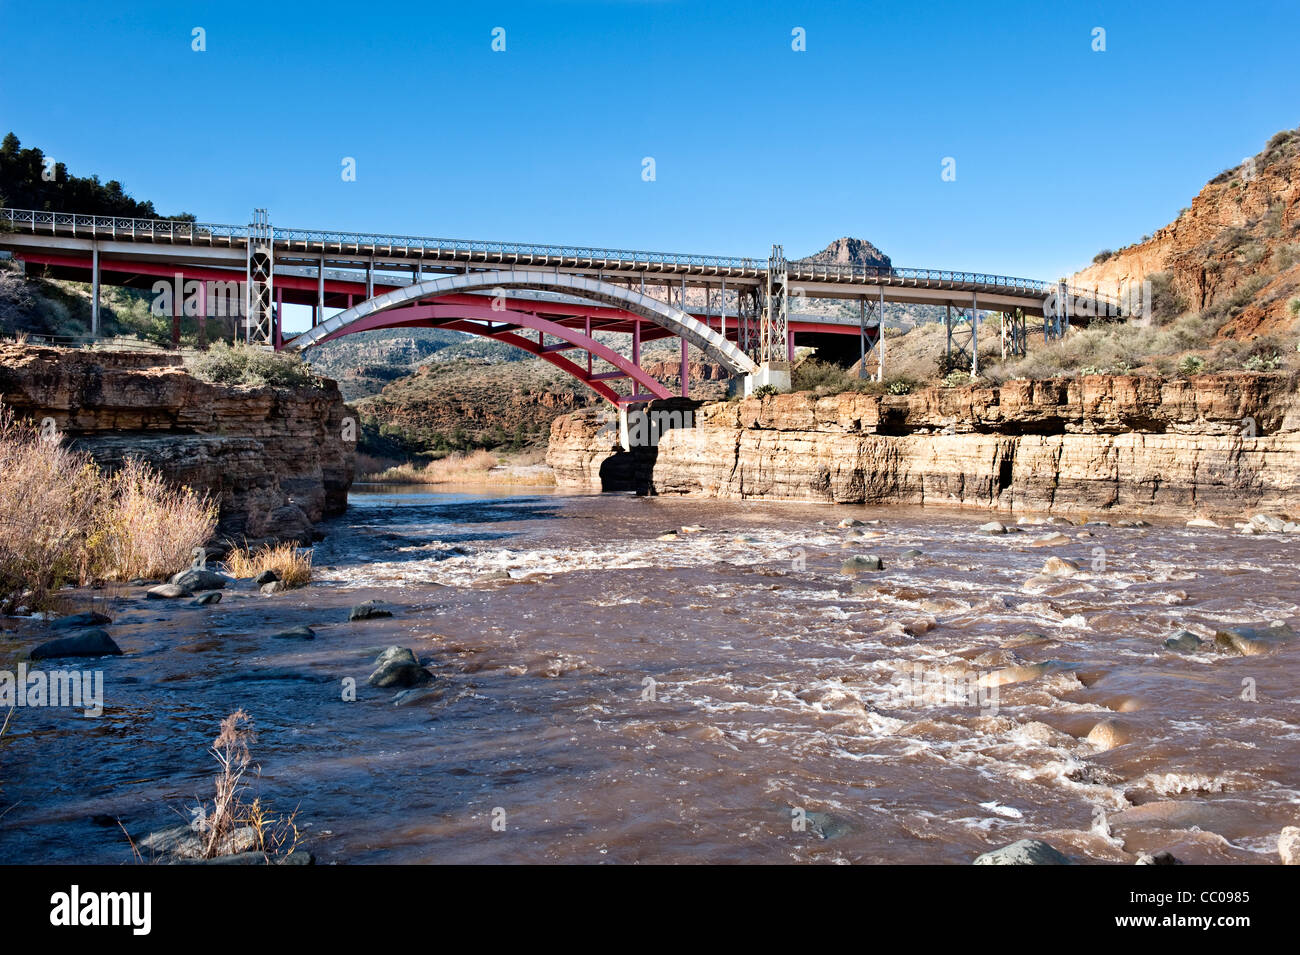 A bridge over a wilderness river in the high desert. Stock Photo